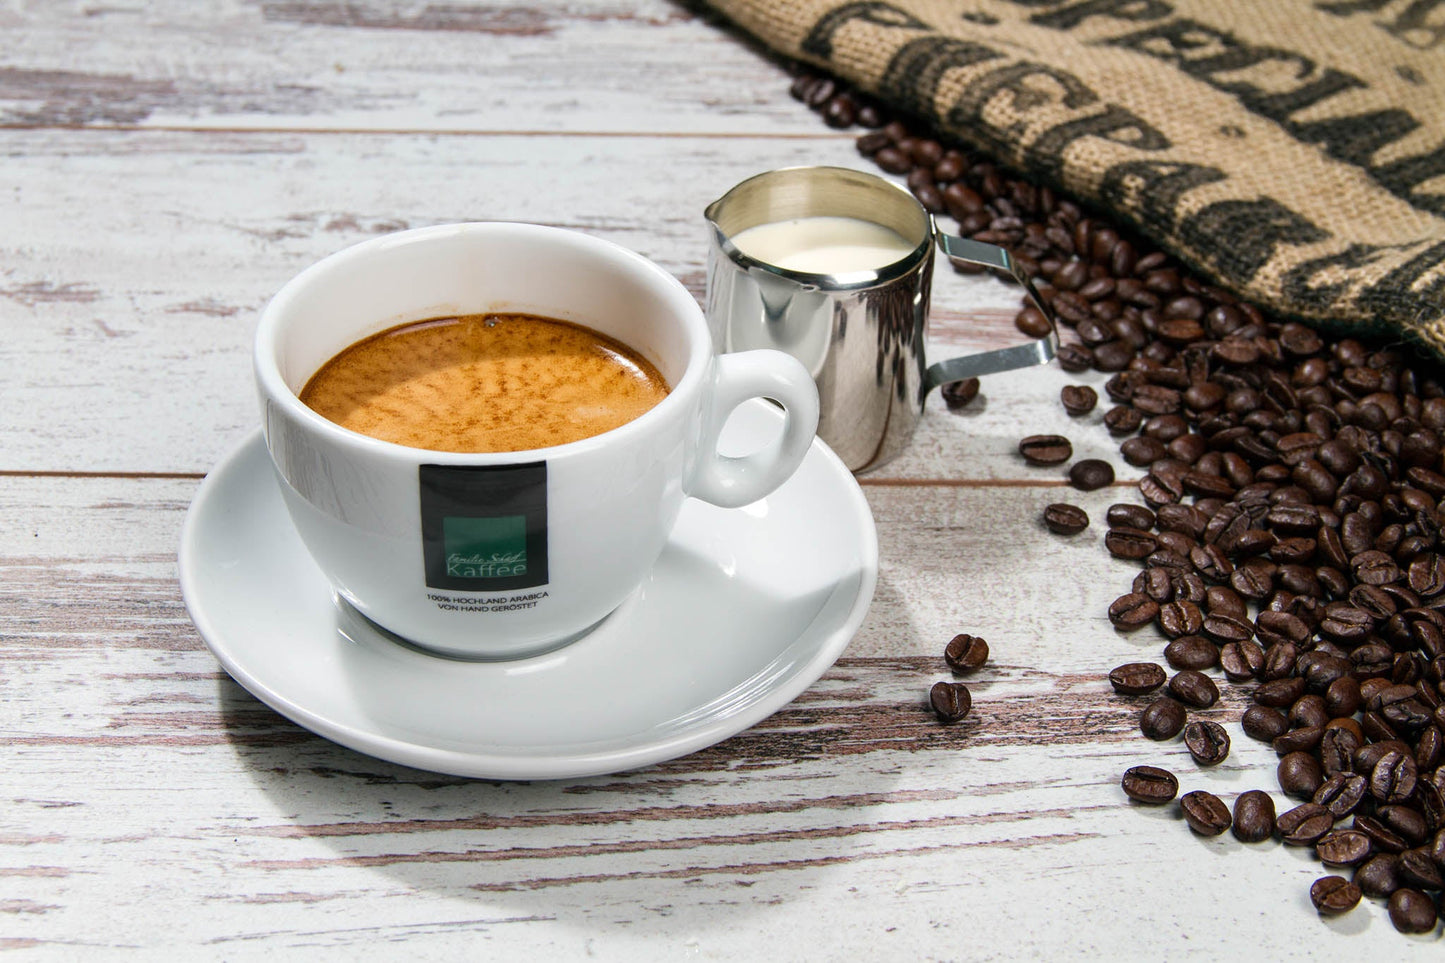 Schärf family coffee “Gourmet” (100% Arabica coffee / Italian Roast)